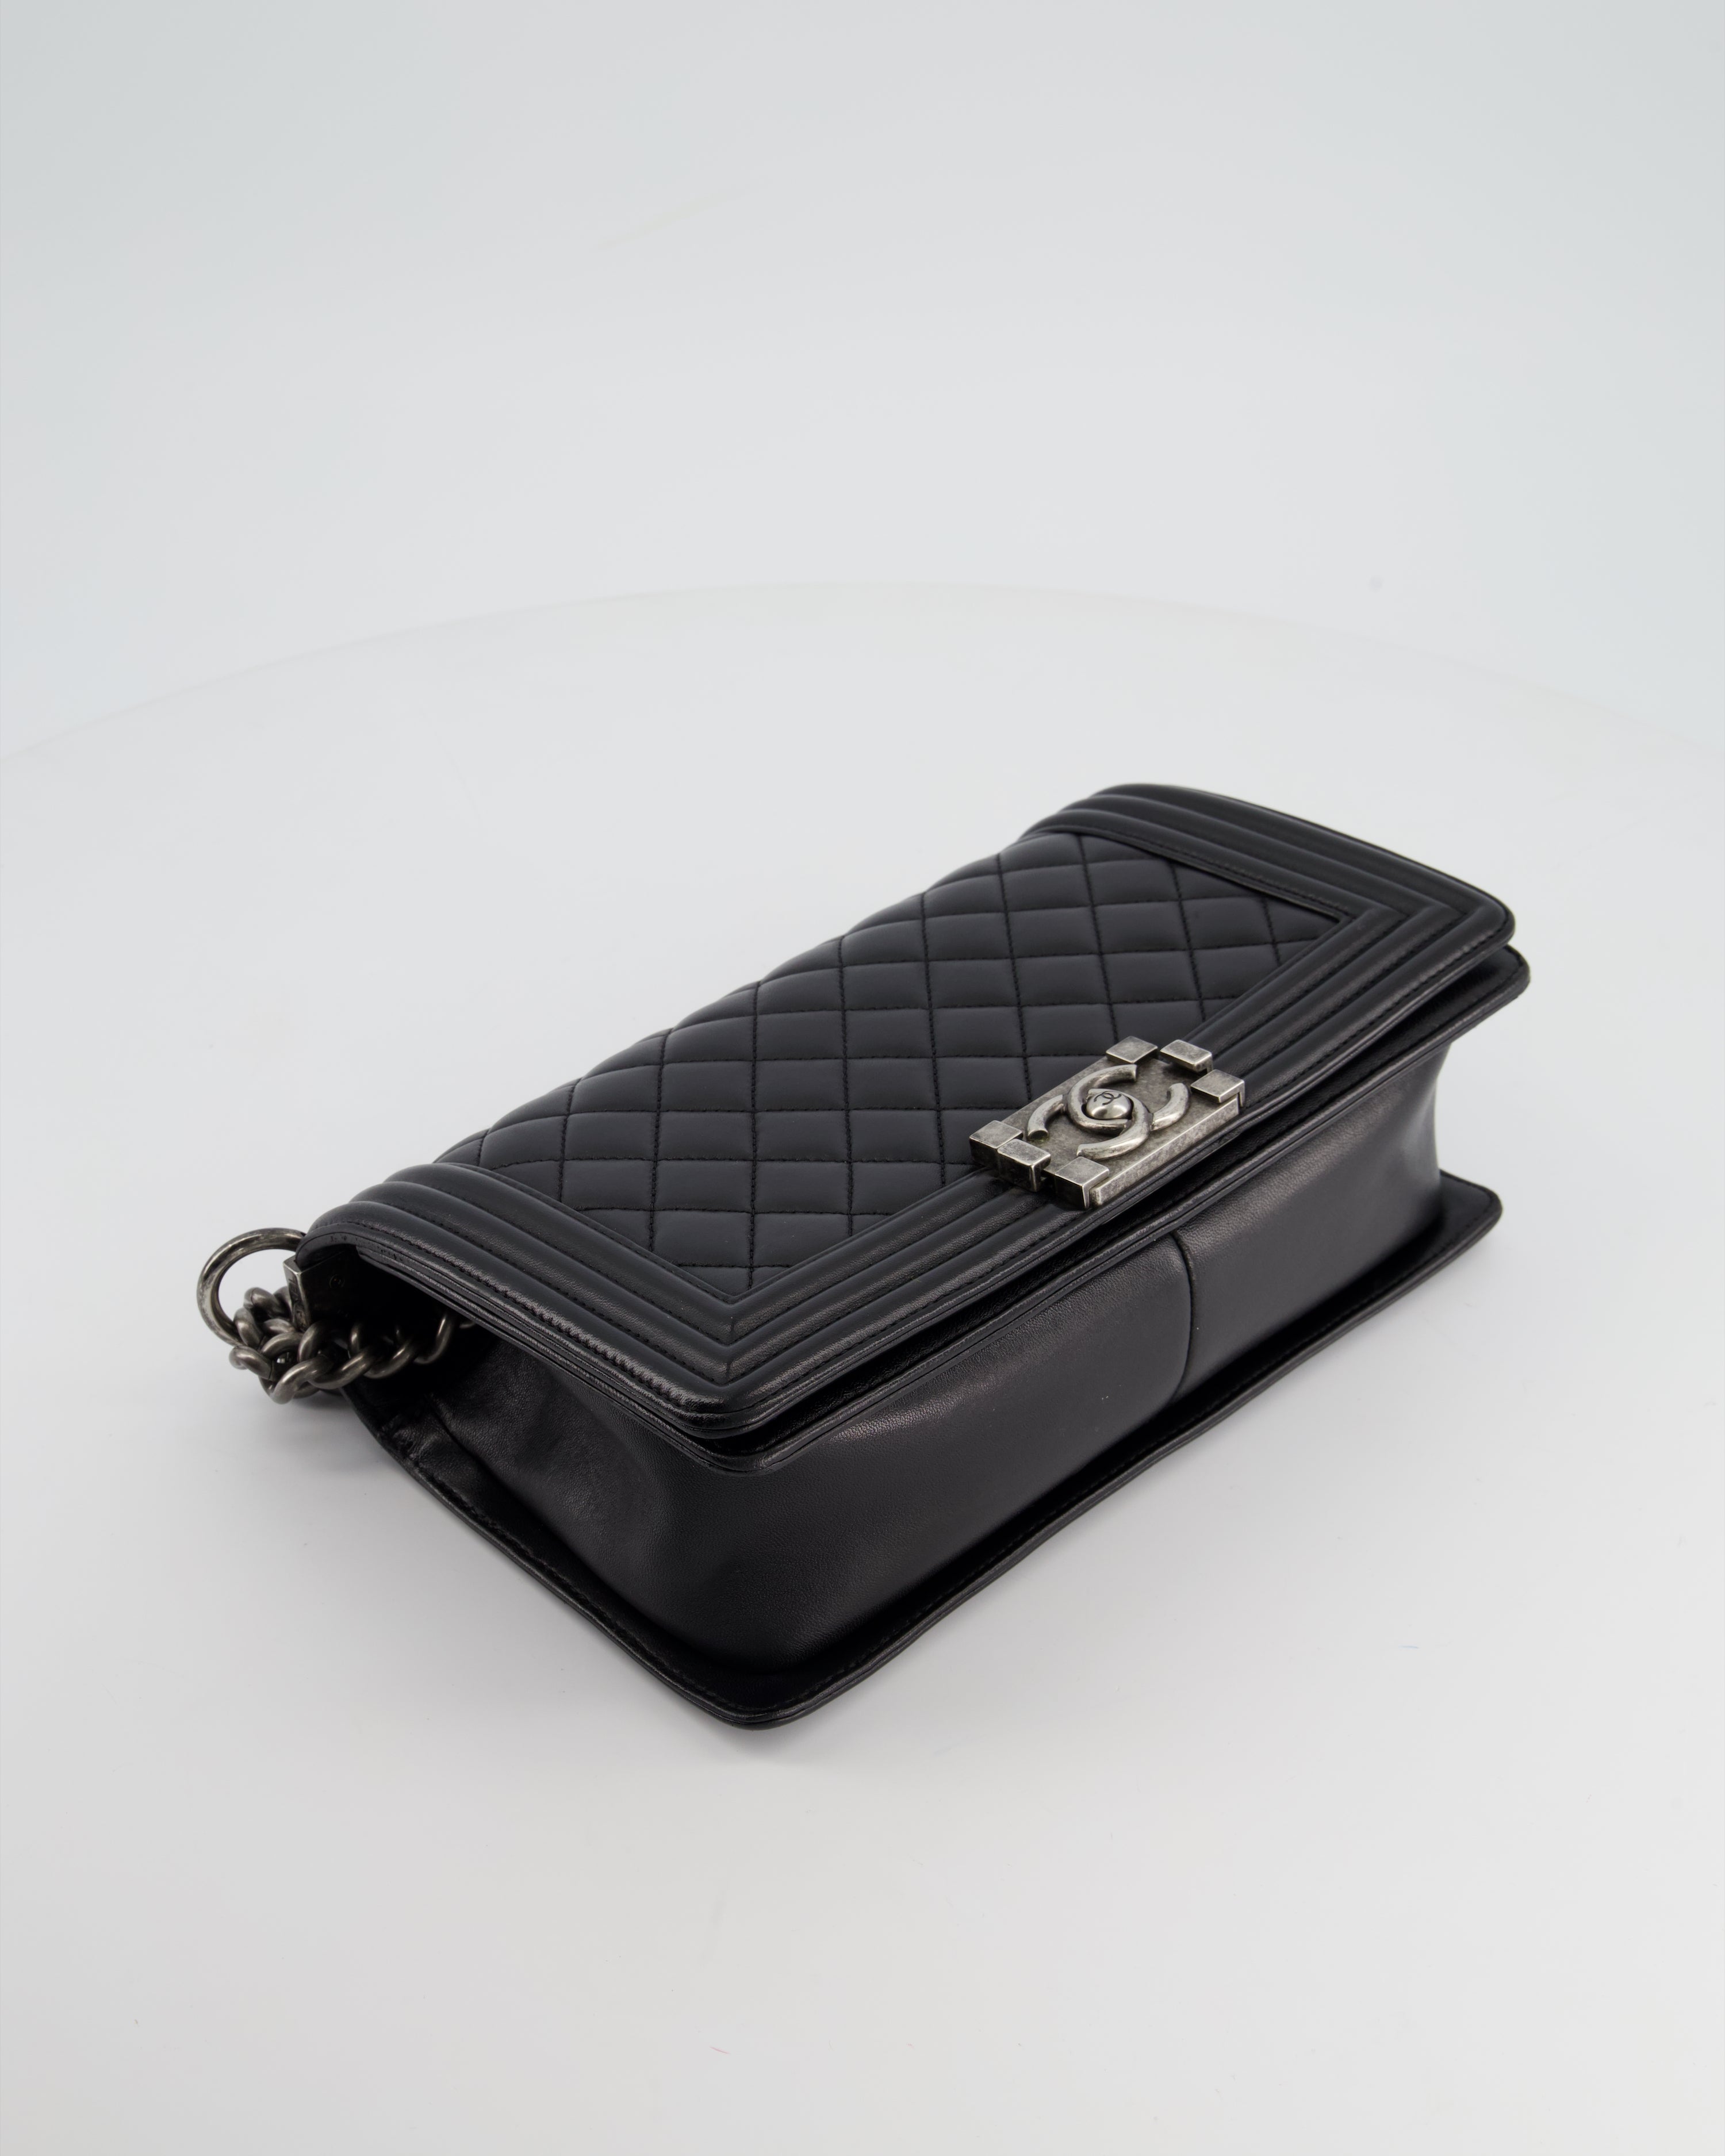 Chanel Black Medium Boy Bag In Lambskin Leather with Ruthenium Hardware